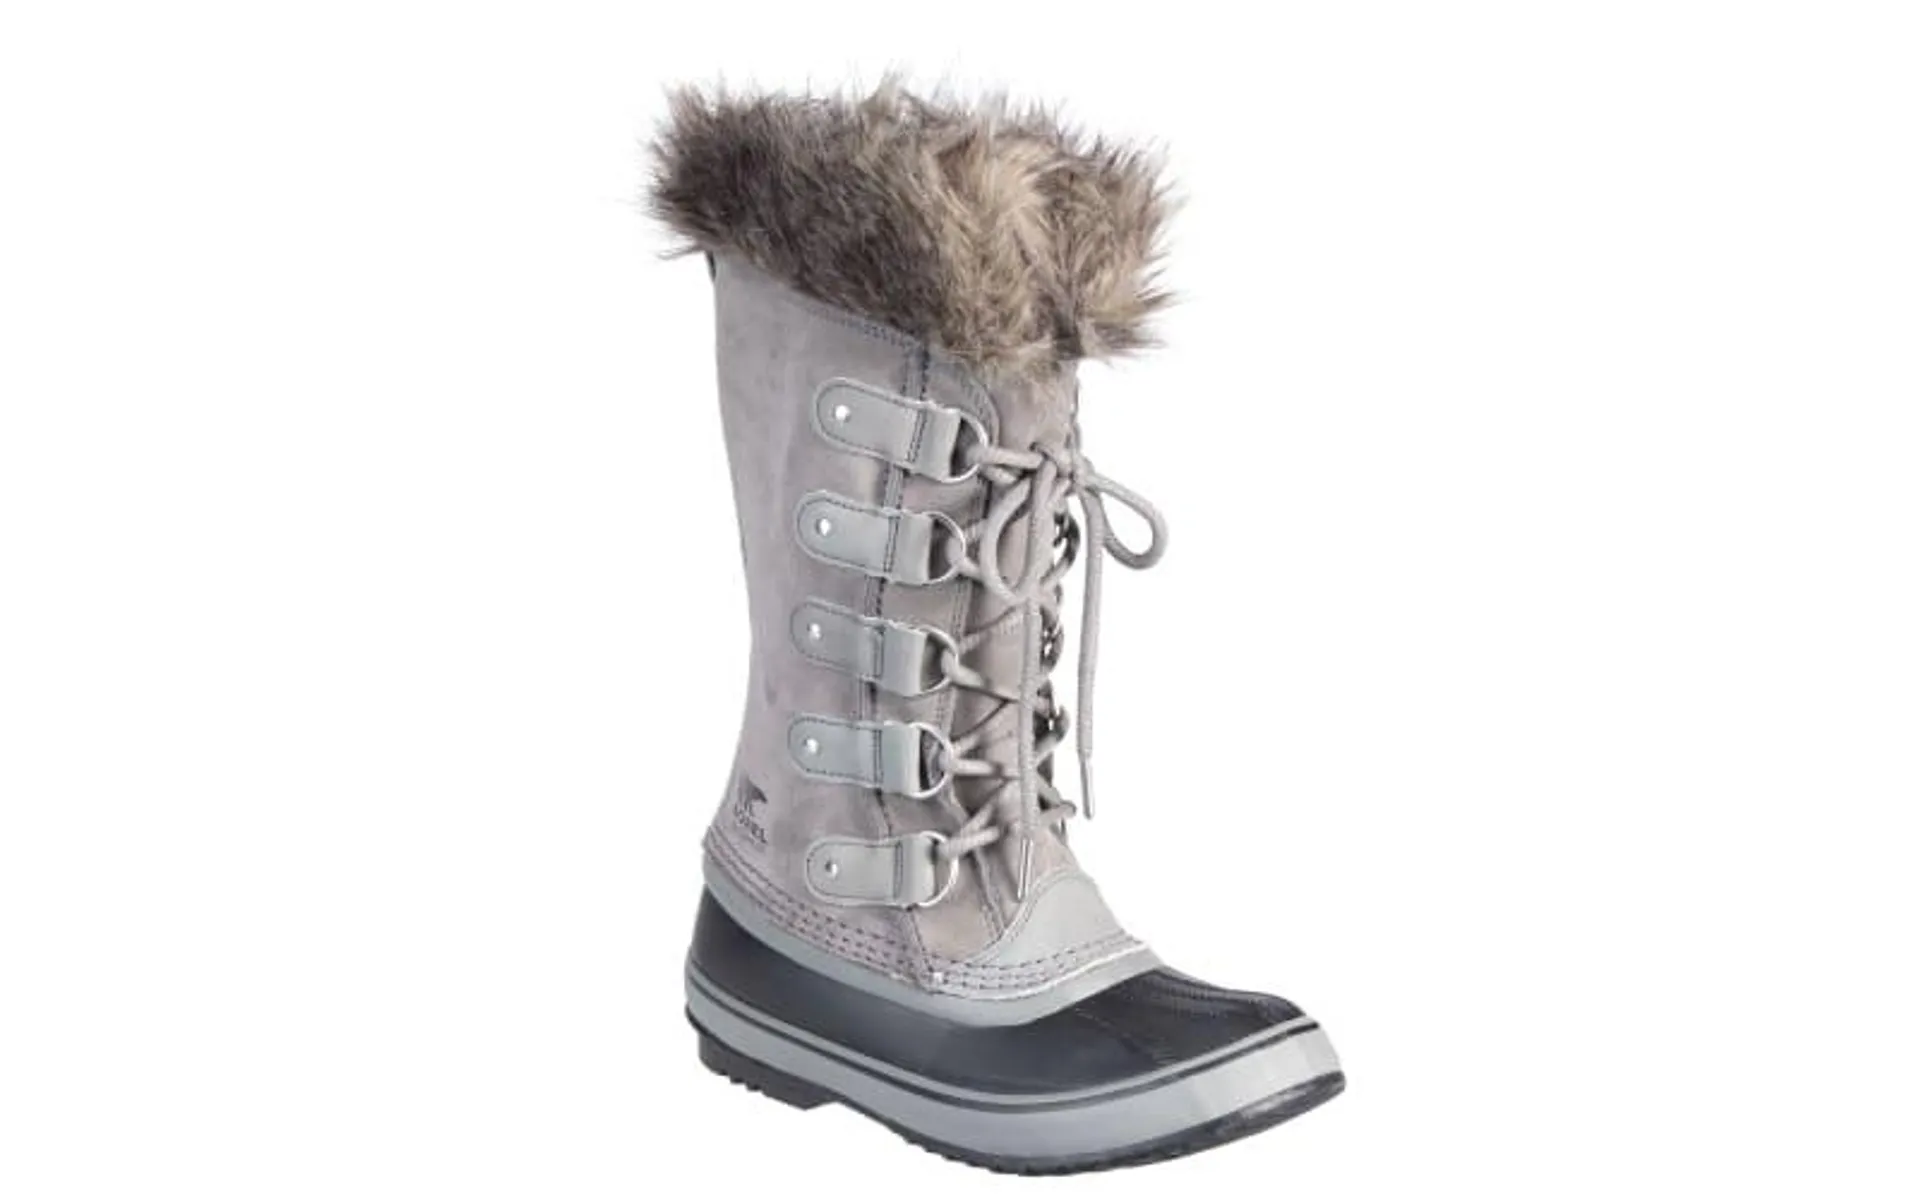 Sorel Joan of Arctic Waterproof Pac Boots for Ladies